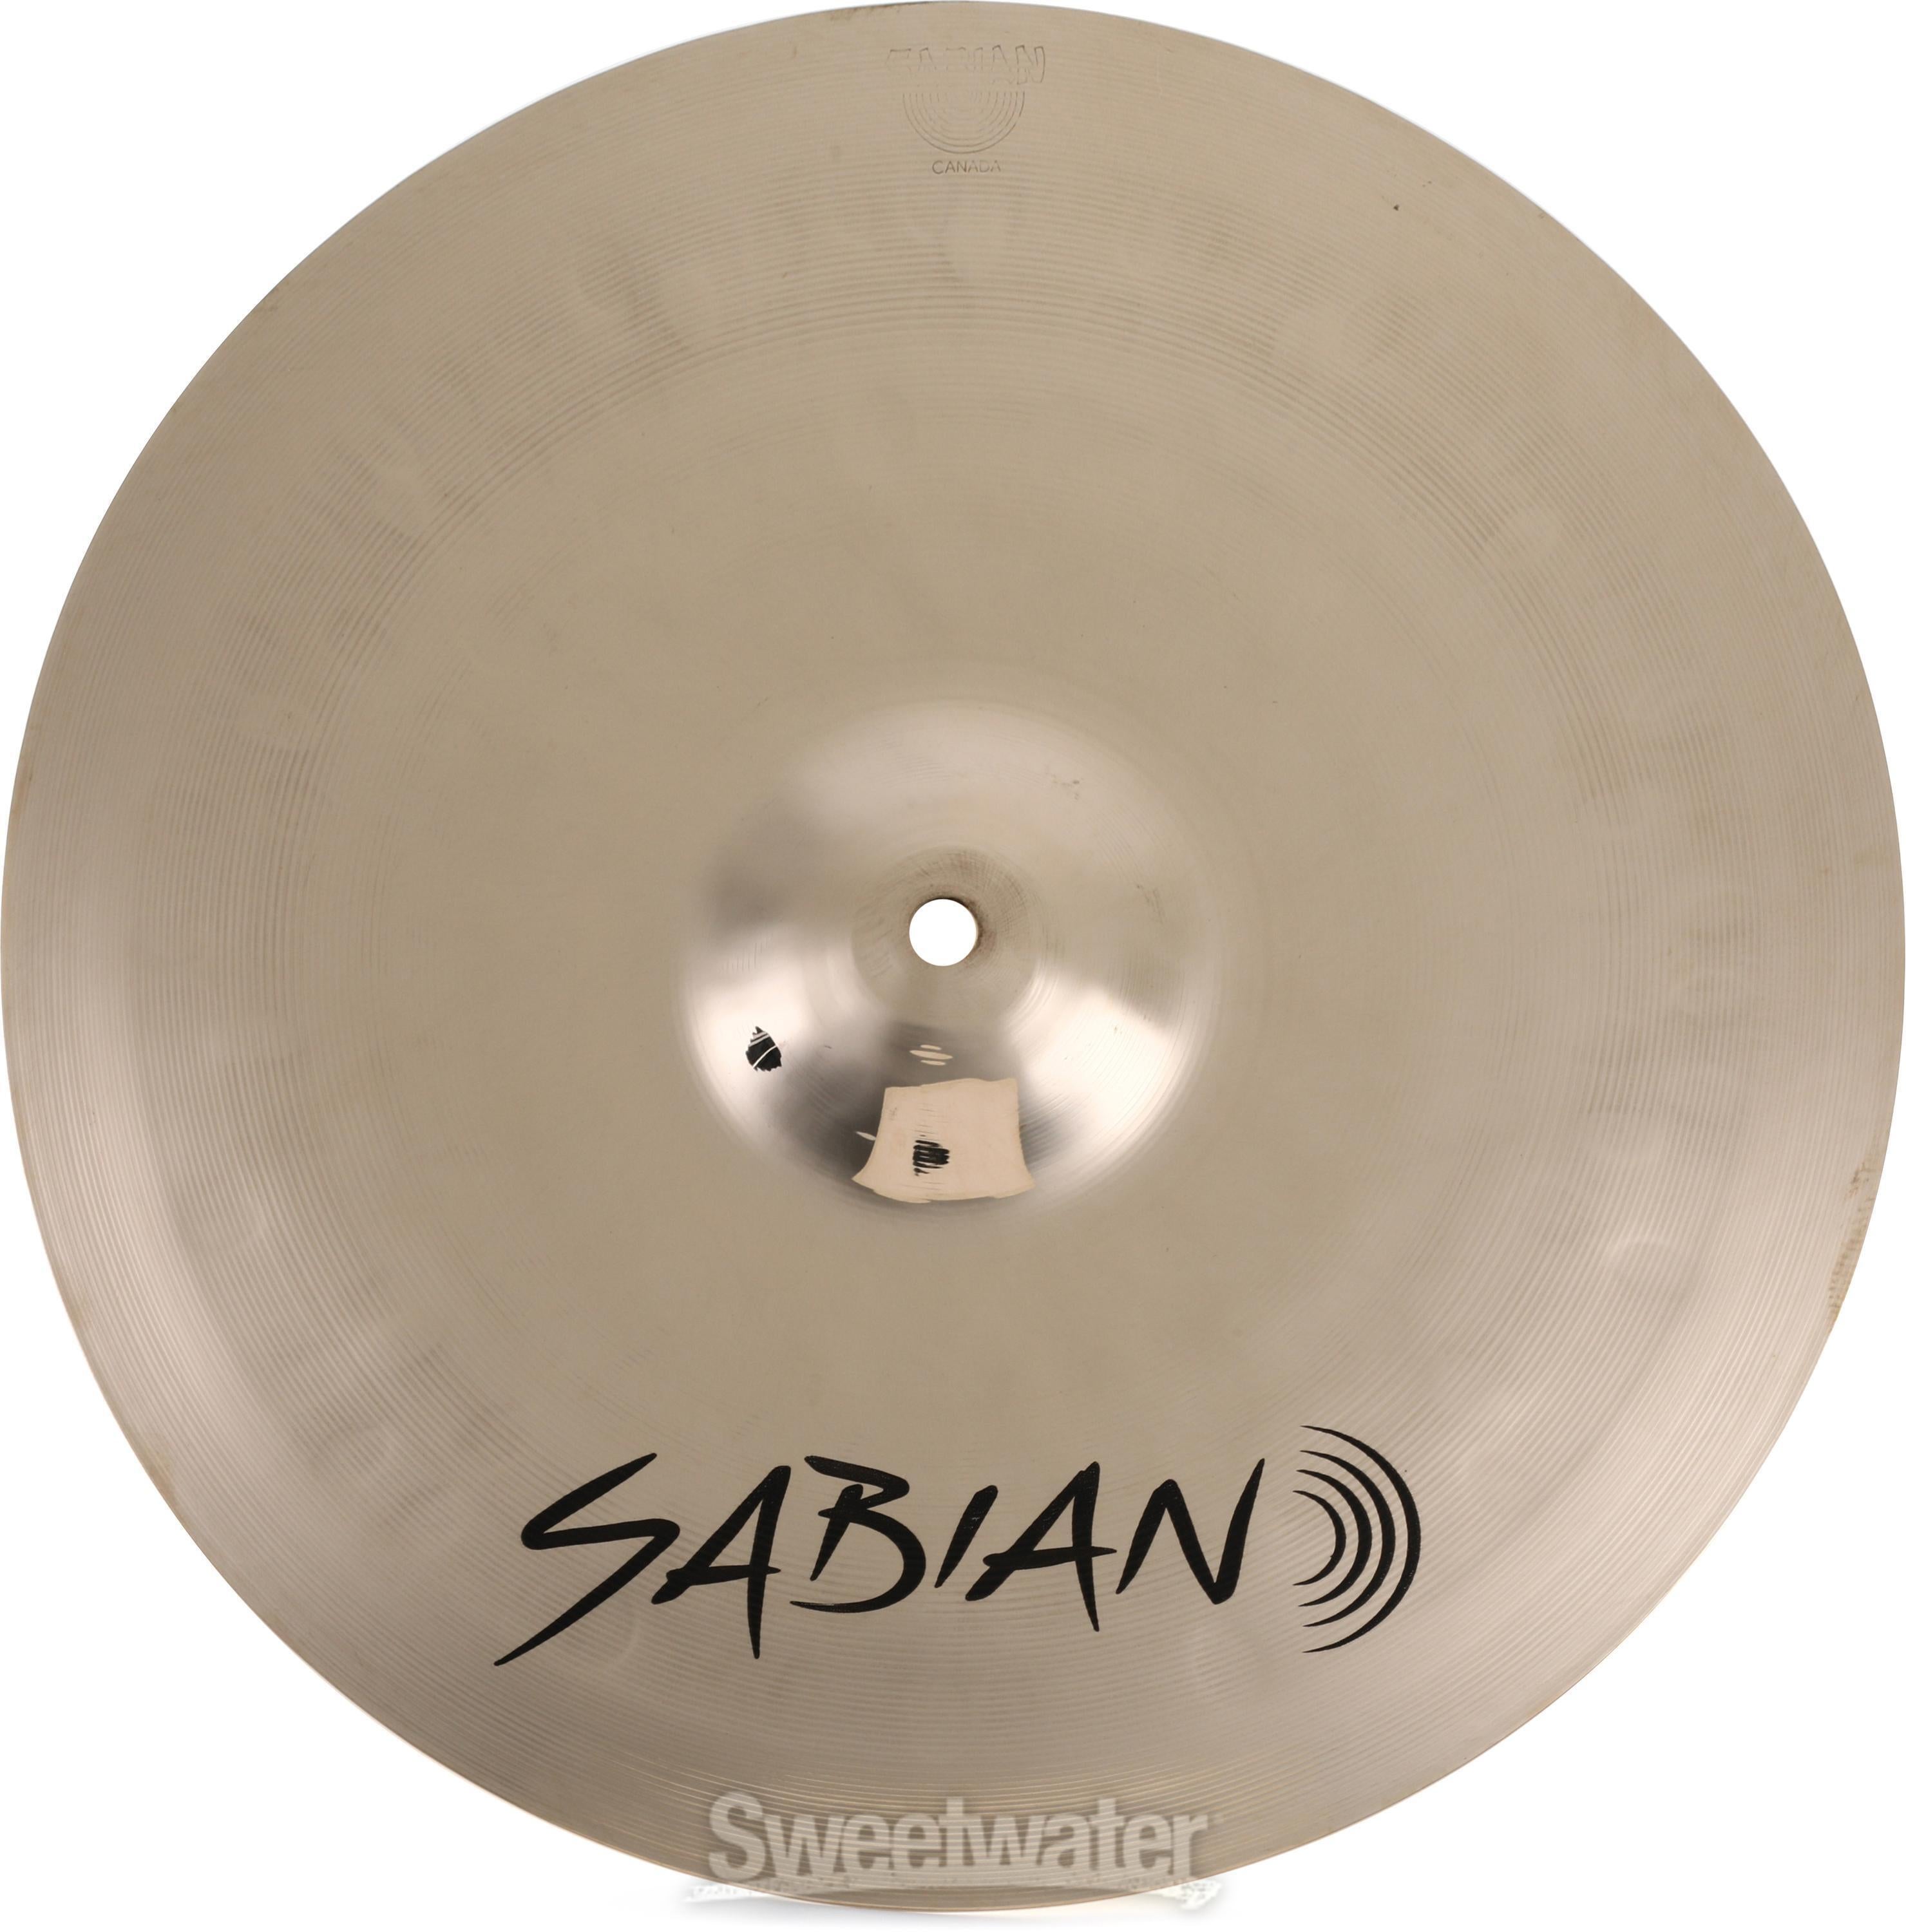 Sabian 15 inch HHX Groove Hi-hats Cymbal - Brilliant Finish